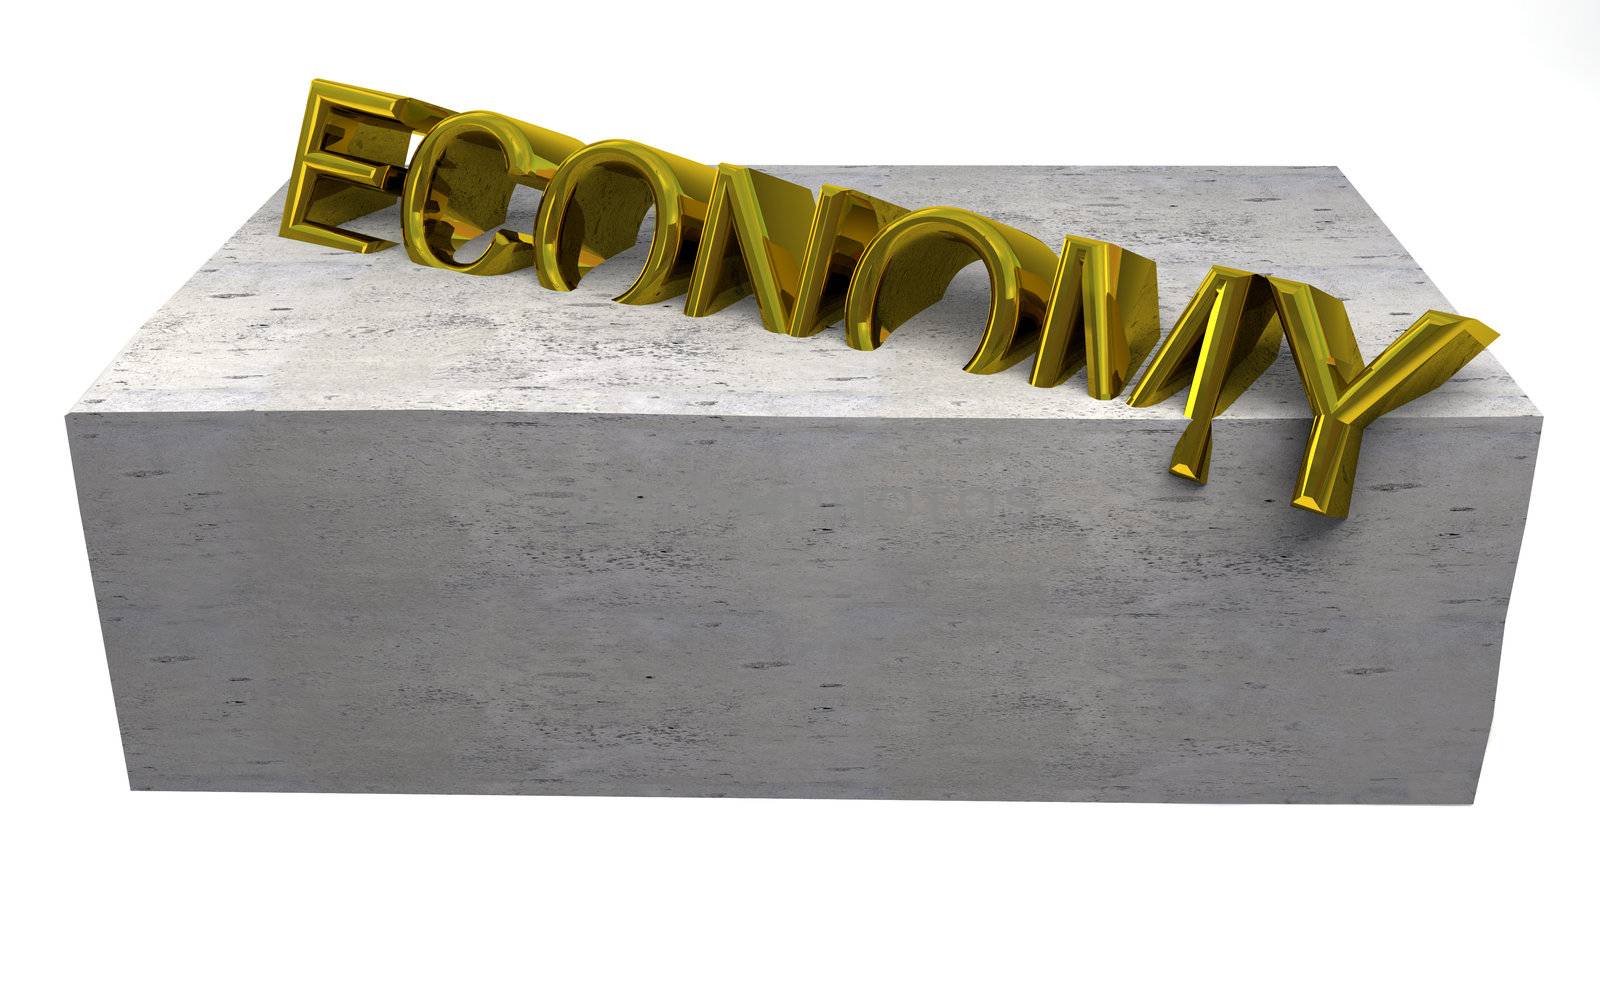 economy crisis by Magnum